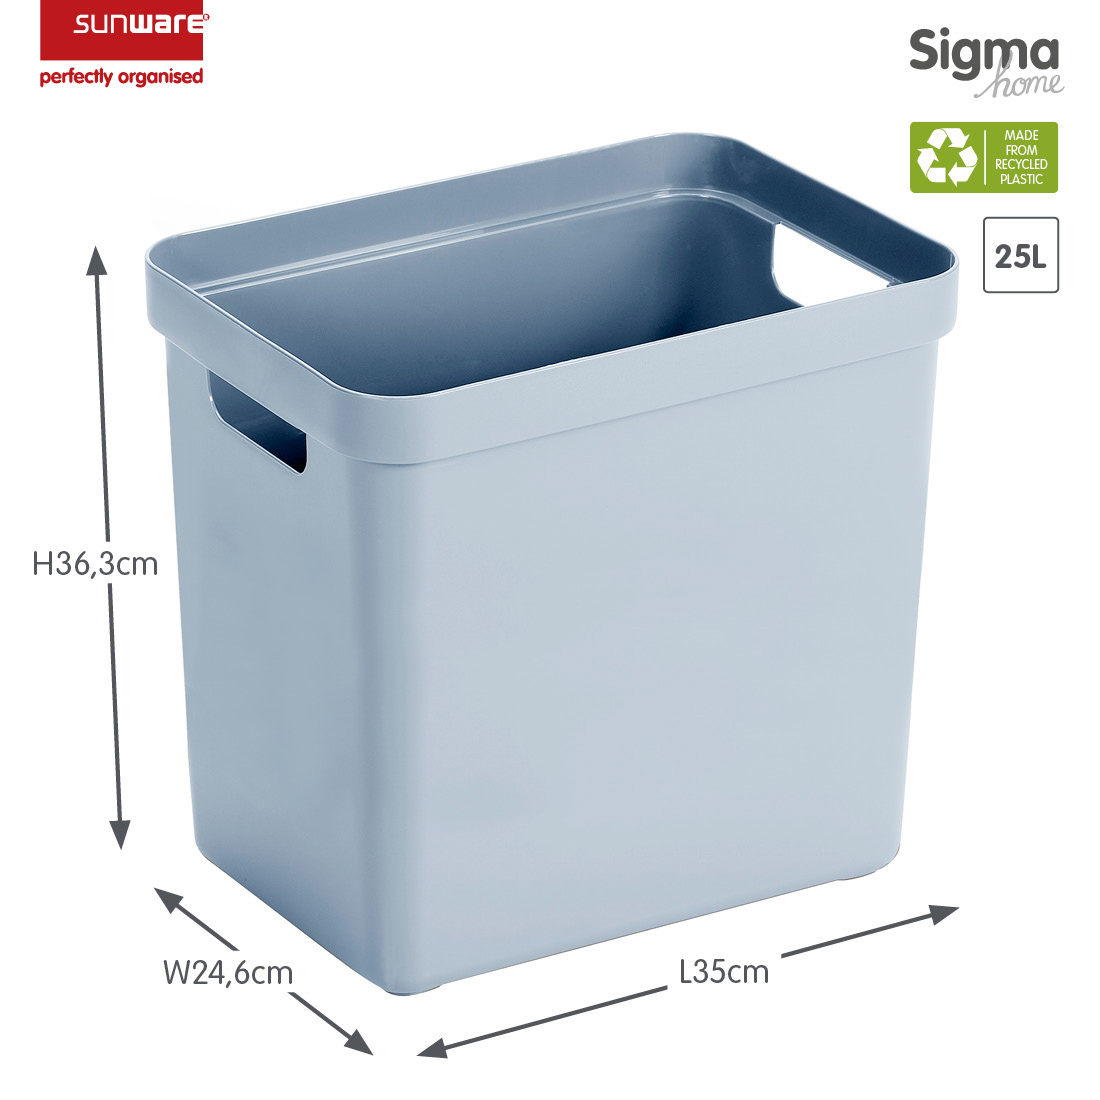 Sigma home Aufbewahrungsbox 25L blau